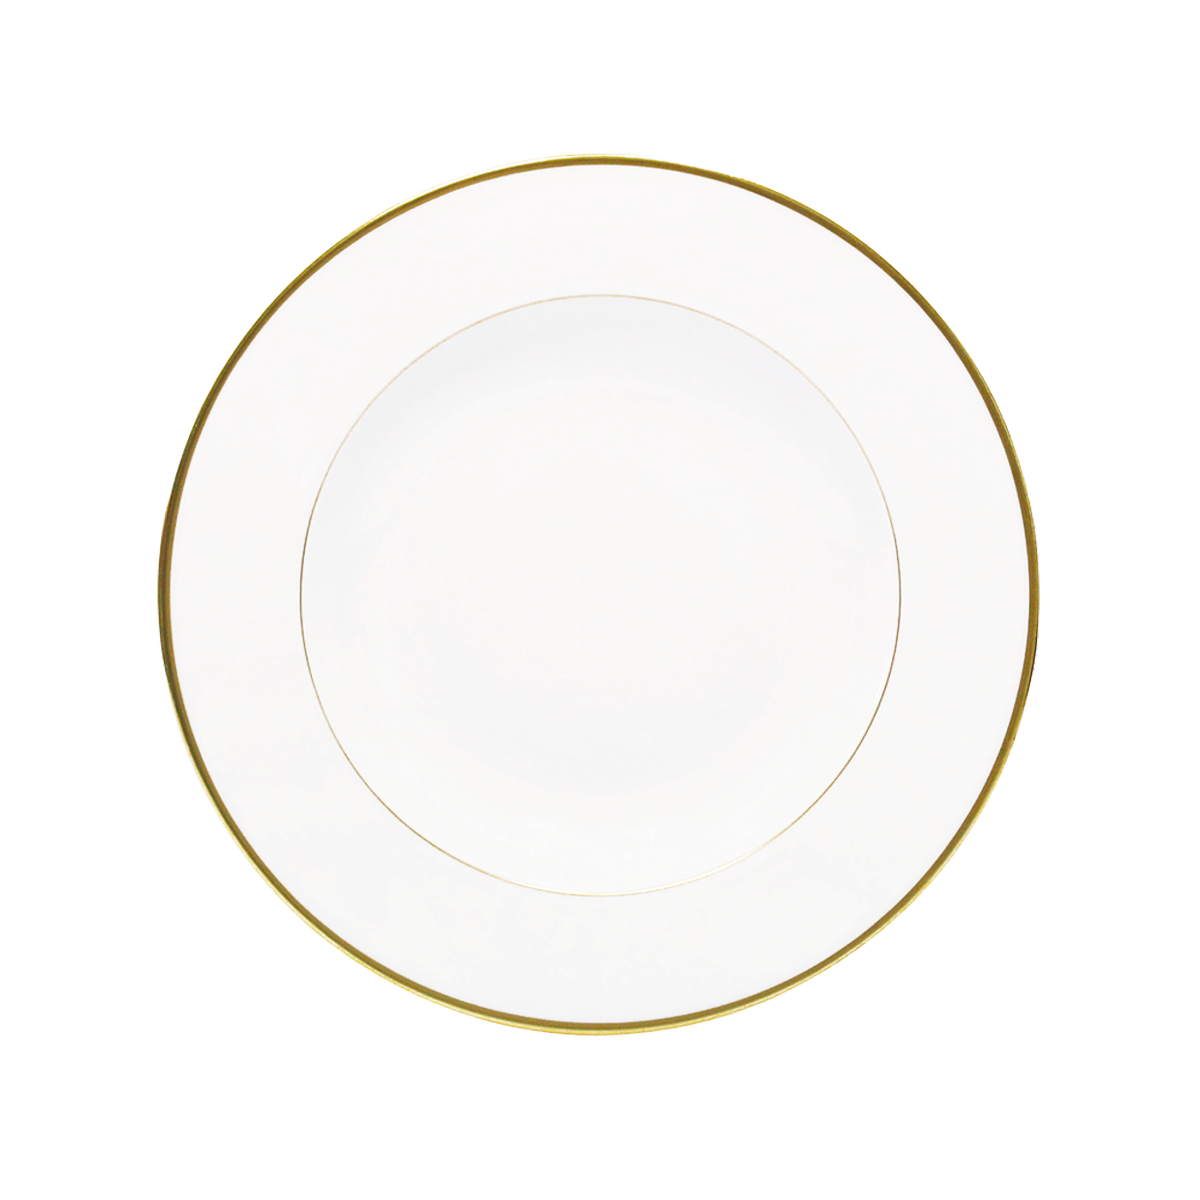 Orsay Rim Soup Plate